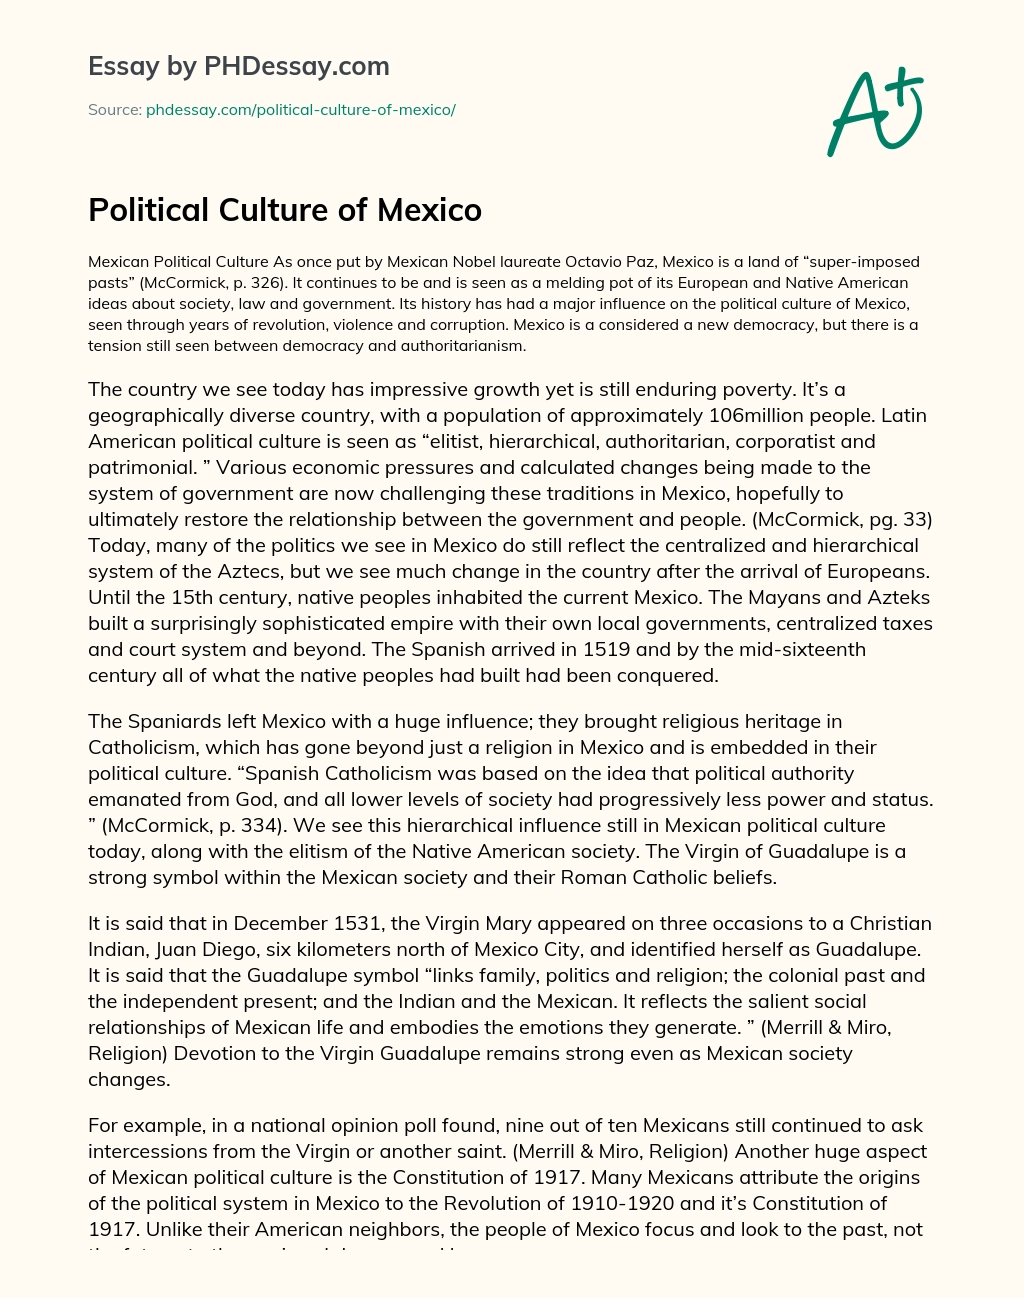 Political Culture of Mexico essay